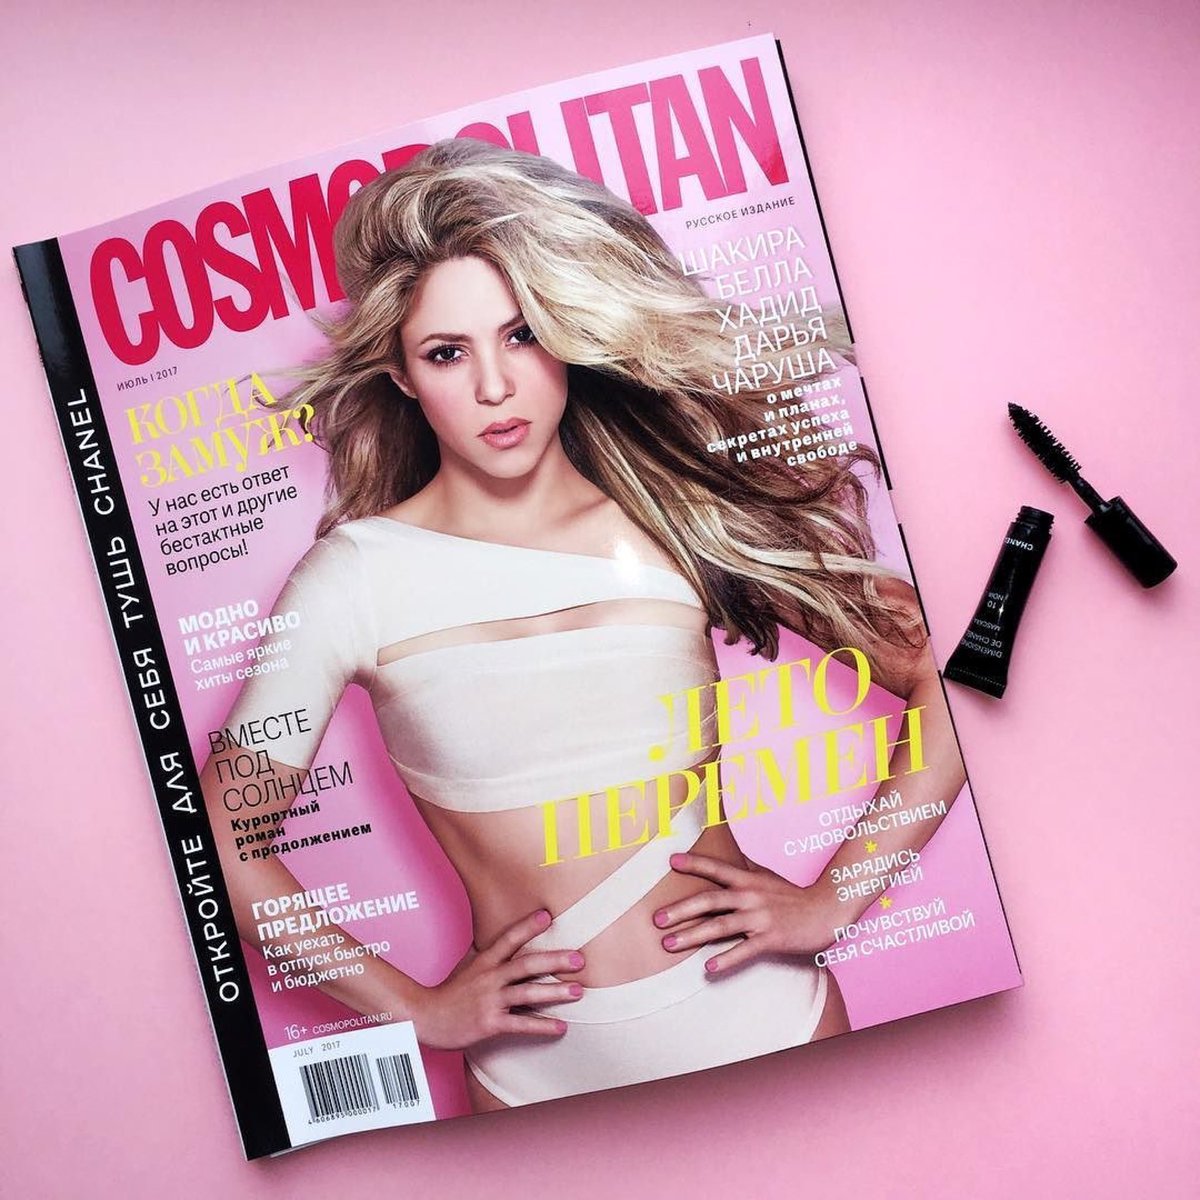 Shak's the cover star of the new Cosmopolitan Russia! Shak en la portada de @CosmopolitanRus de este mes! ShakHQ https://t.co/WbTlCtJrh9